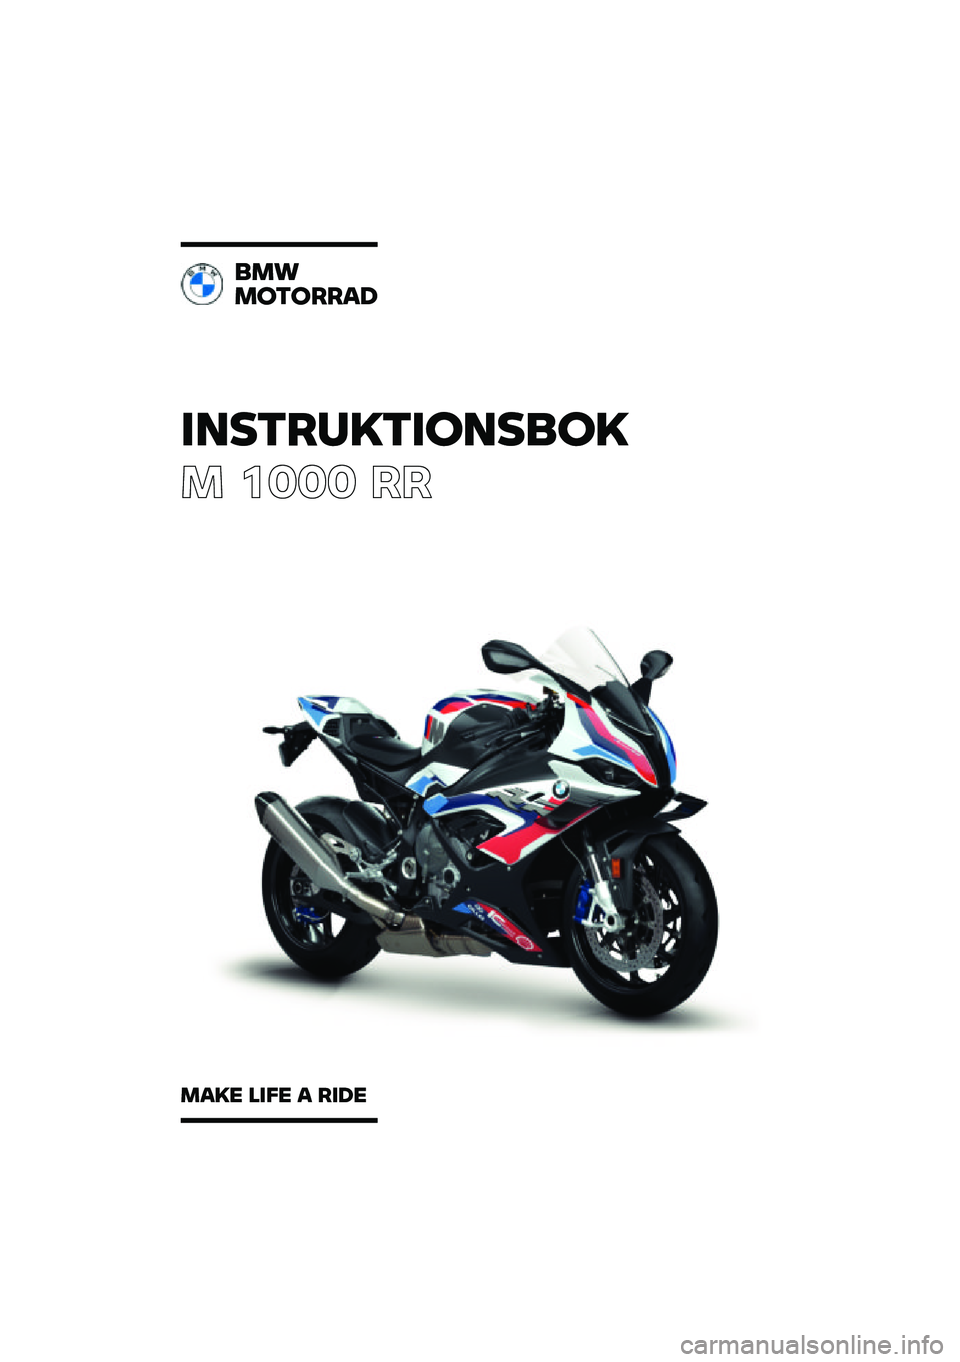 BMW MOTORRAD M 1000 RR 2021  Instruktionsbok (in Swedish) �������\b���	���
�	�\b
� ���� ��
�
��\f
��	��	���
�
��
�\b� ���� �
 ���� 